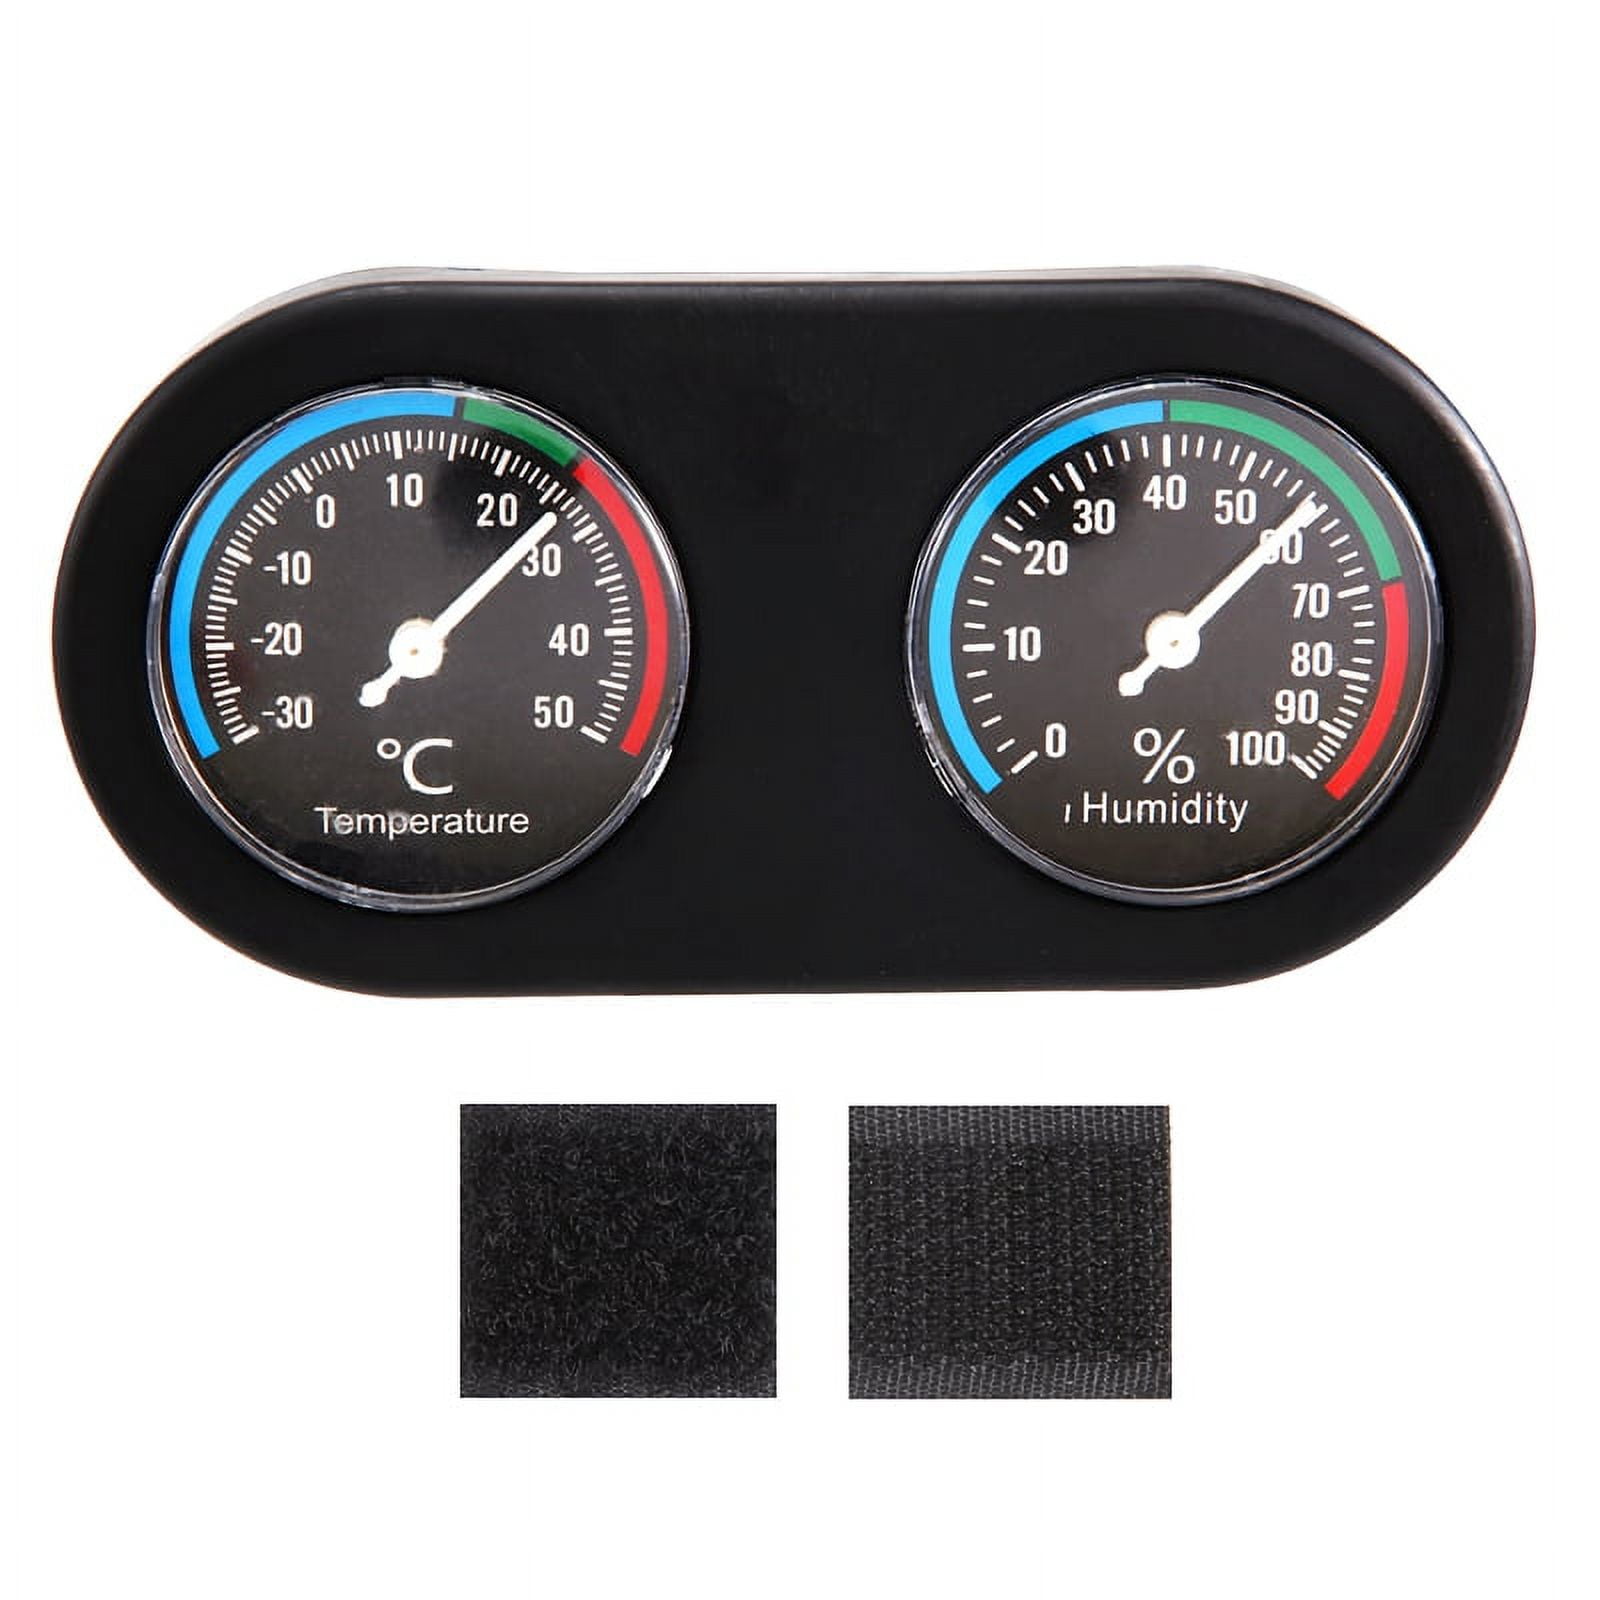 Terrarium Thermometer-Hygrometer, Environmental Controls